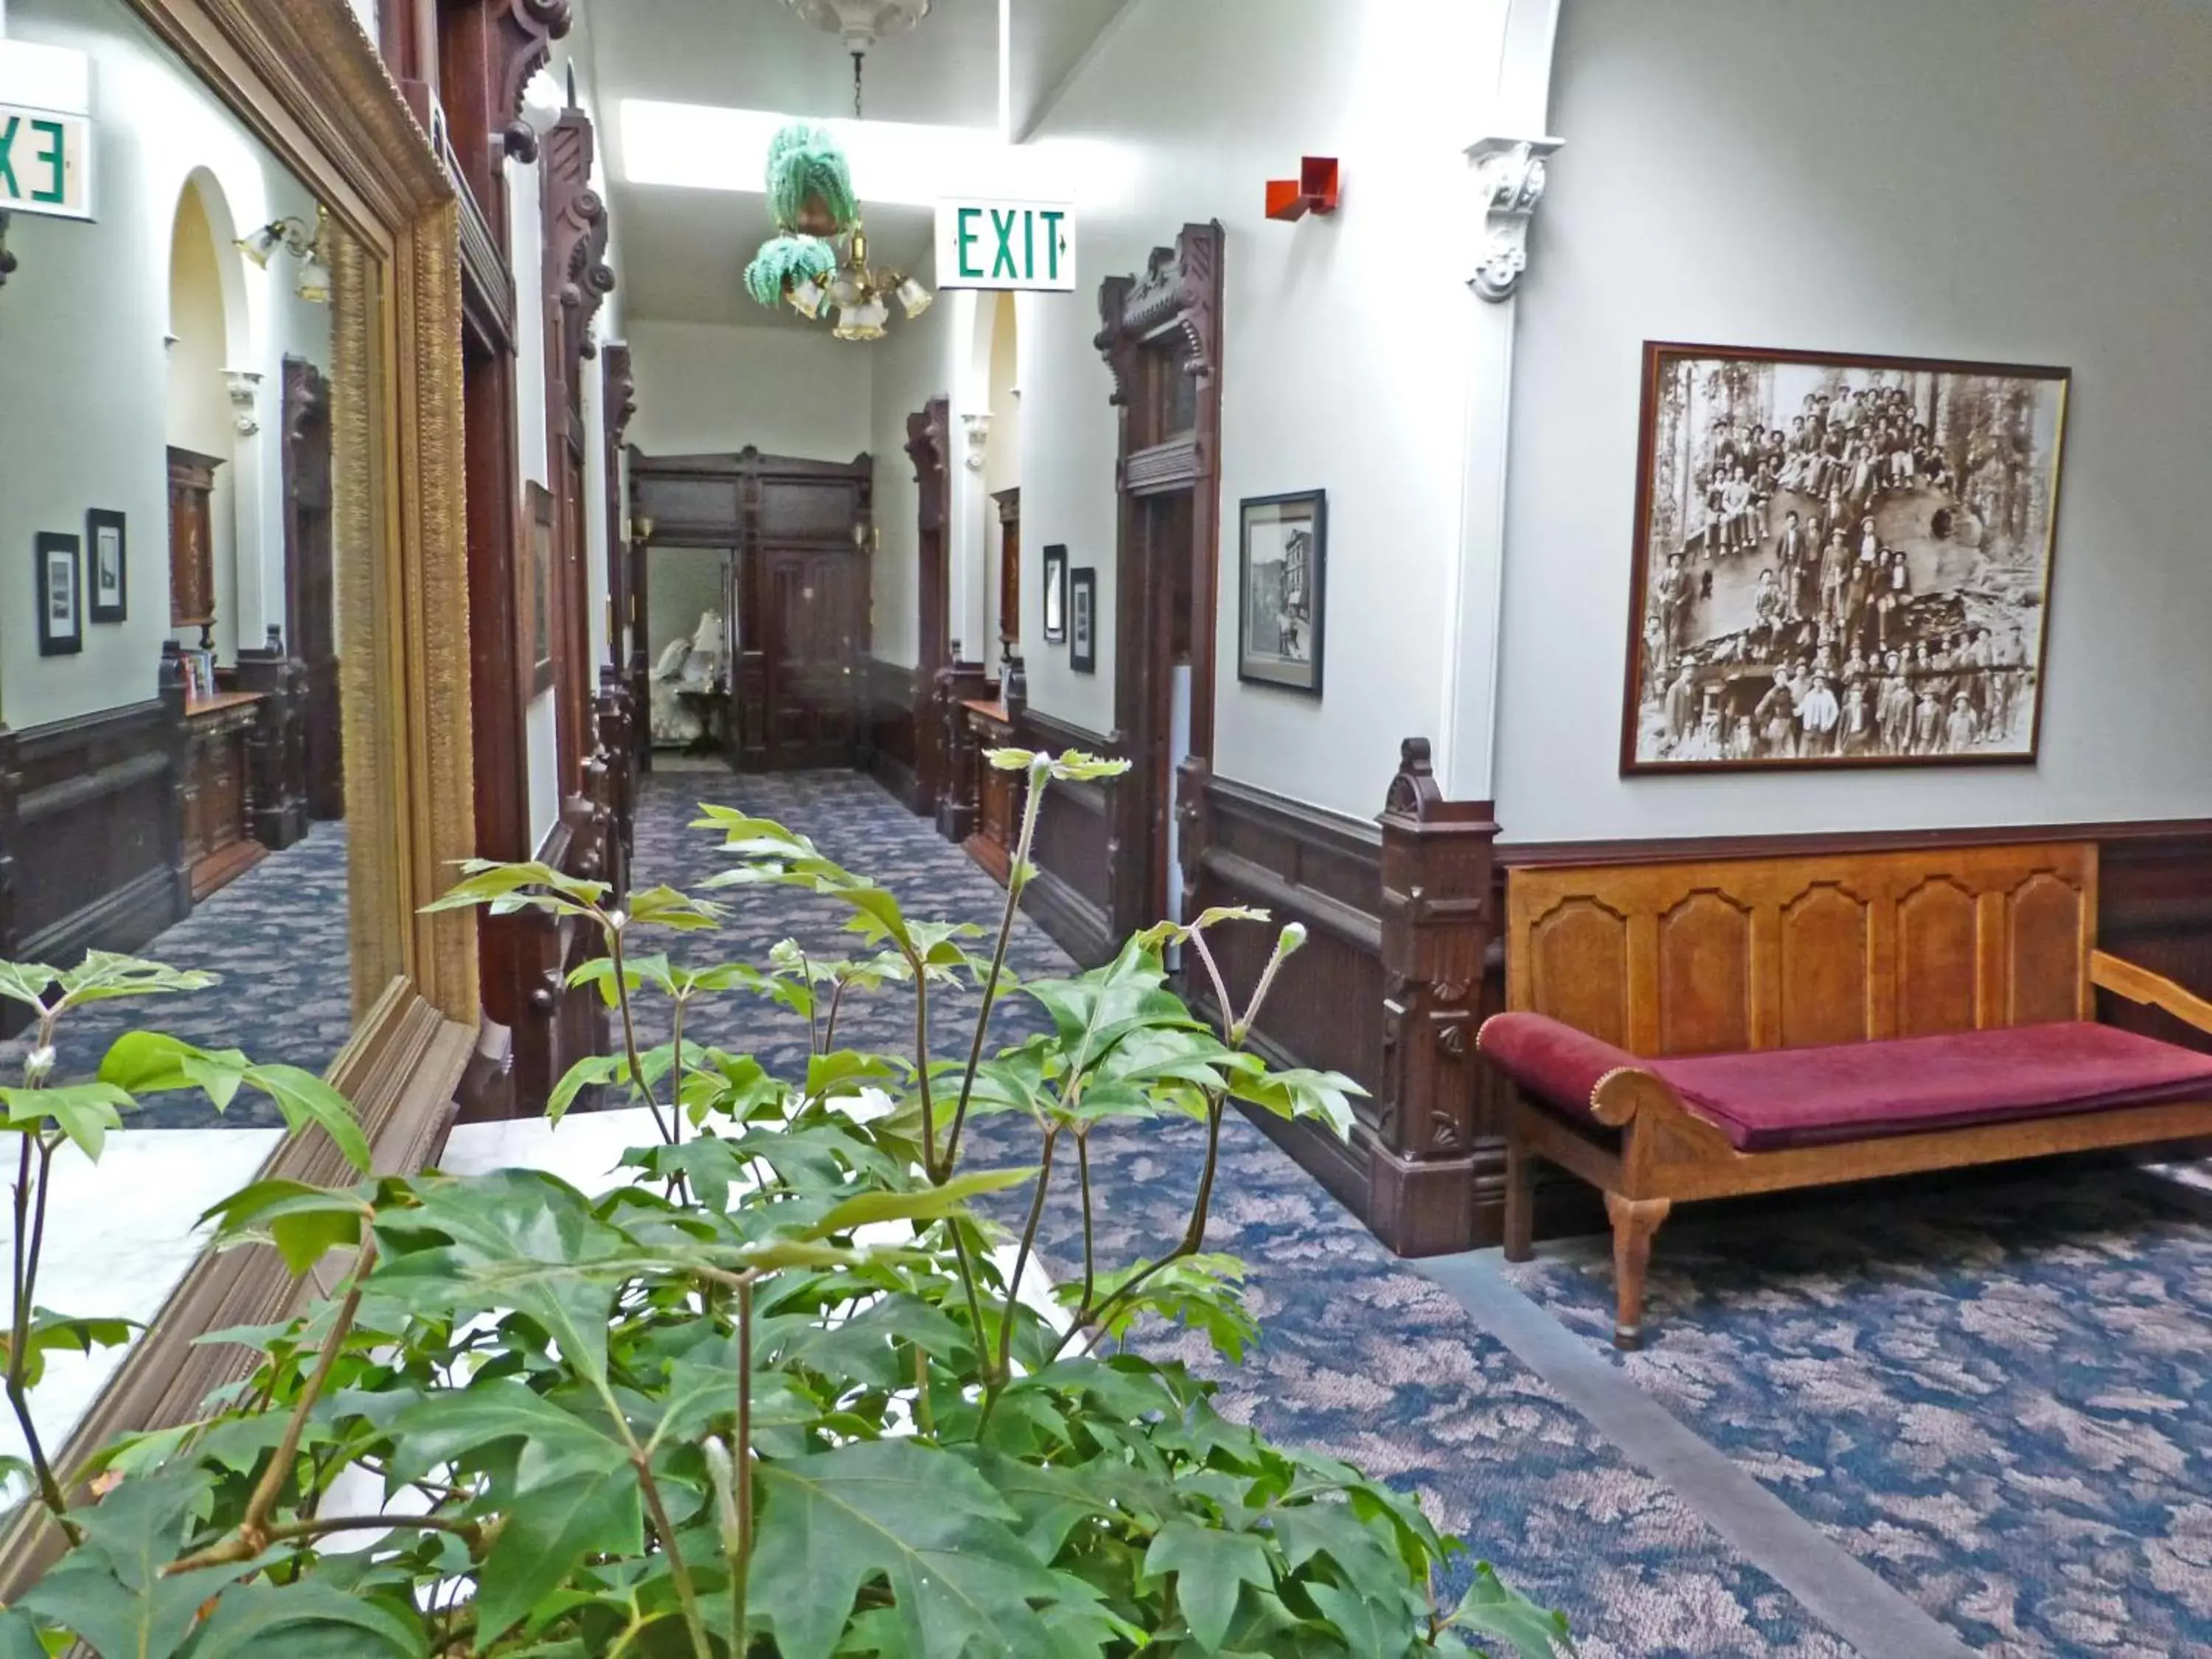 Lobby or reception in Victorian Inn